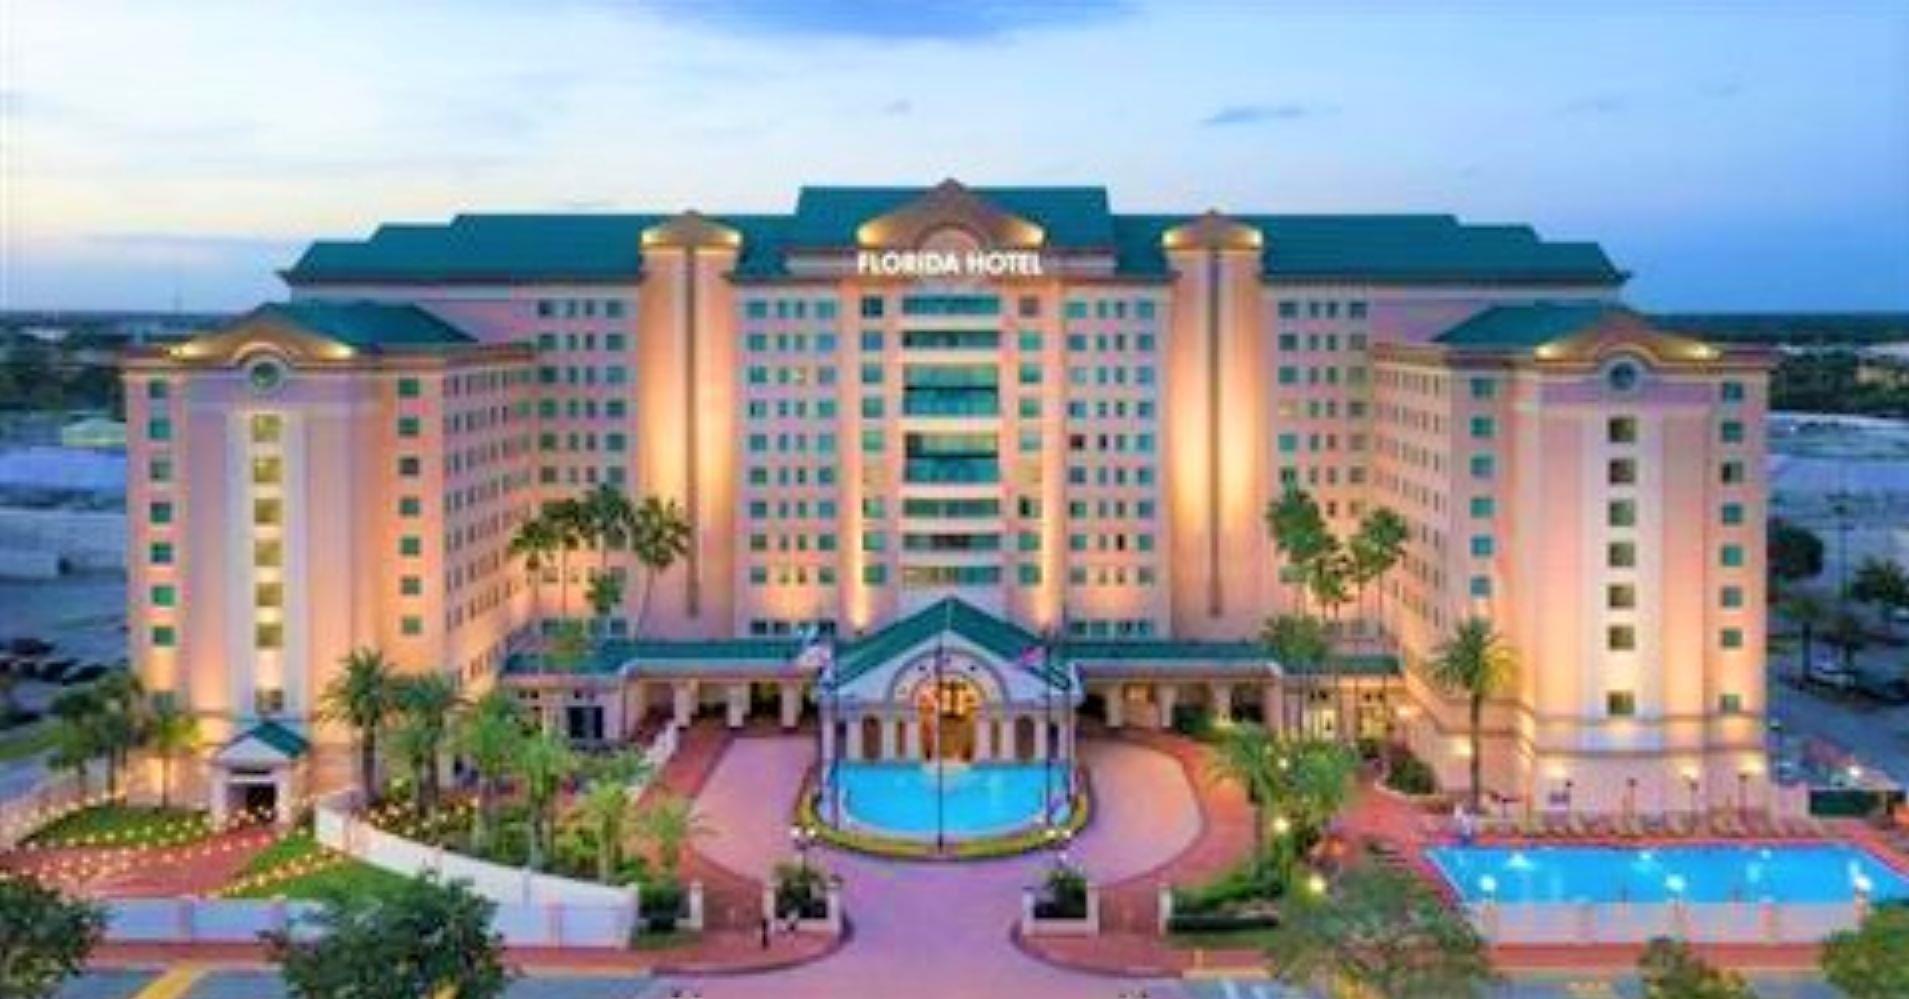 The Florida Hotel Orlando and Conference Center in Orlando, FL